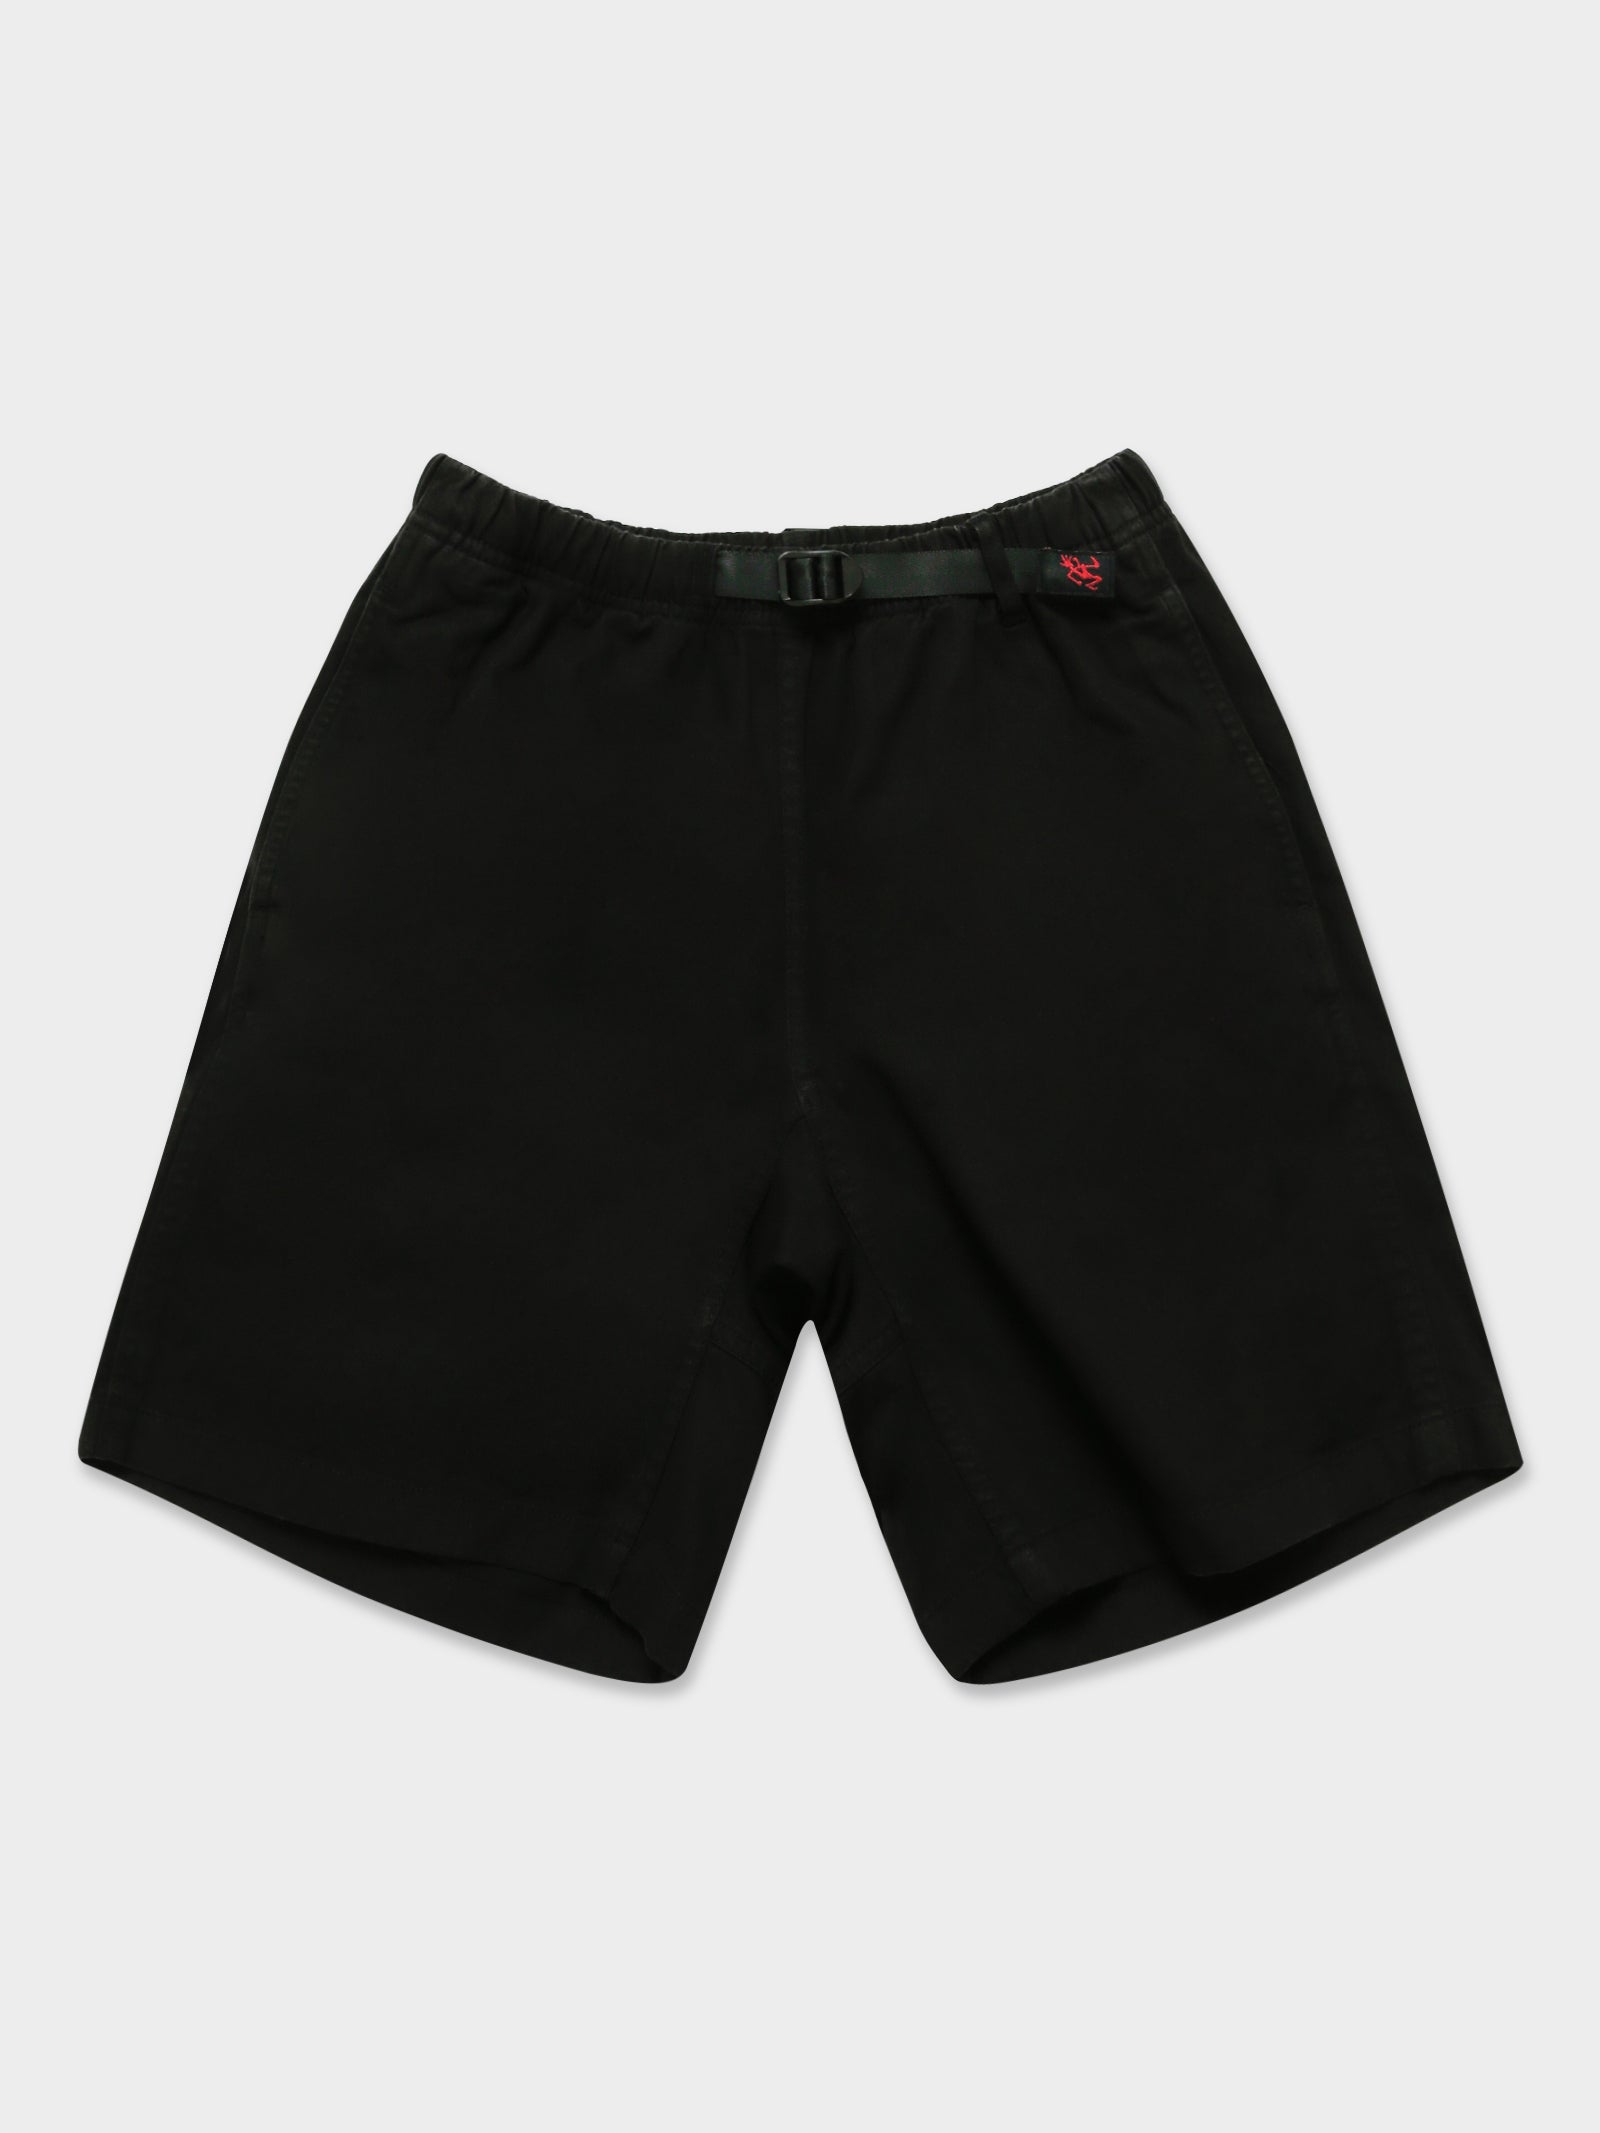 G Shorts in Black